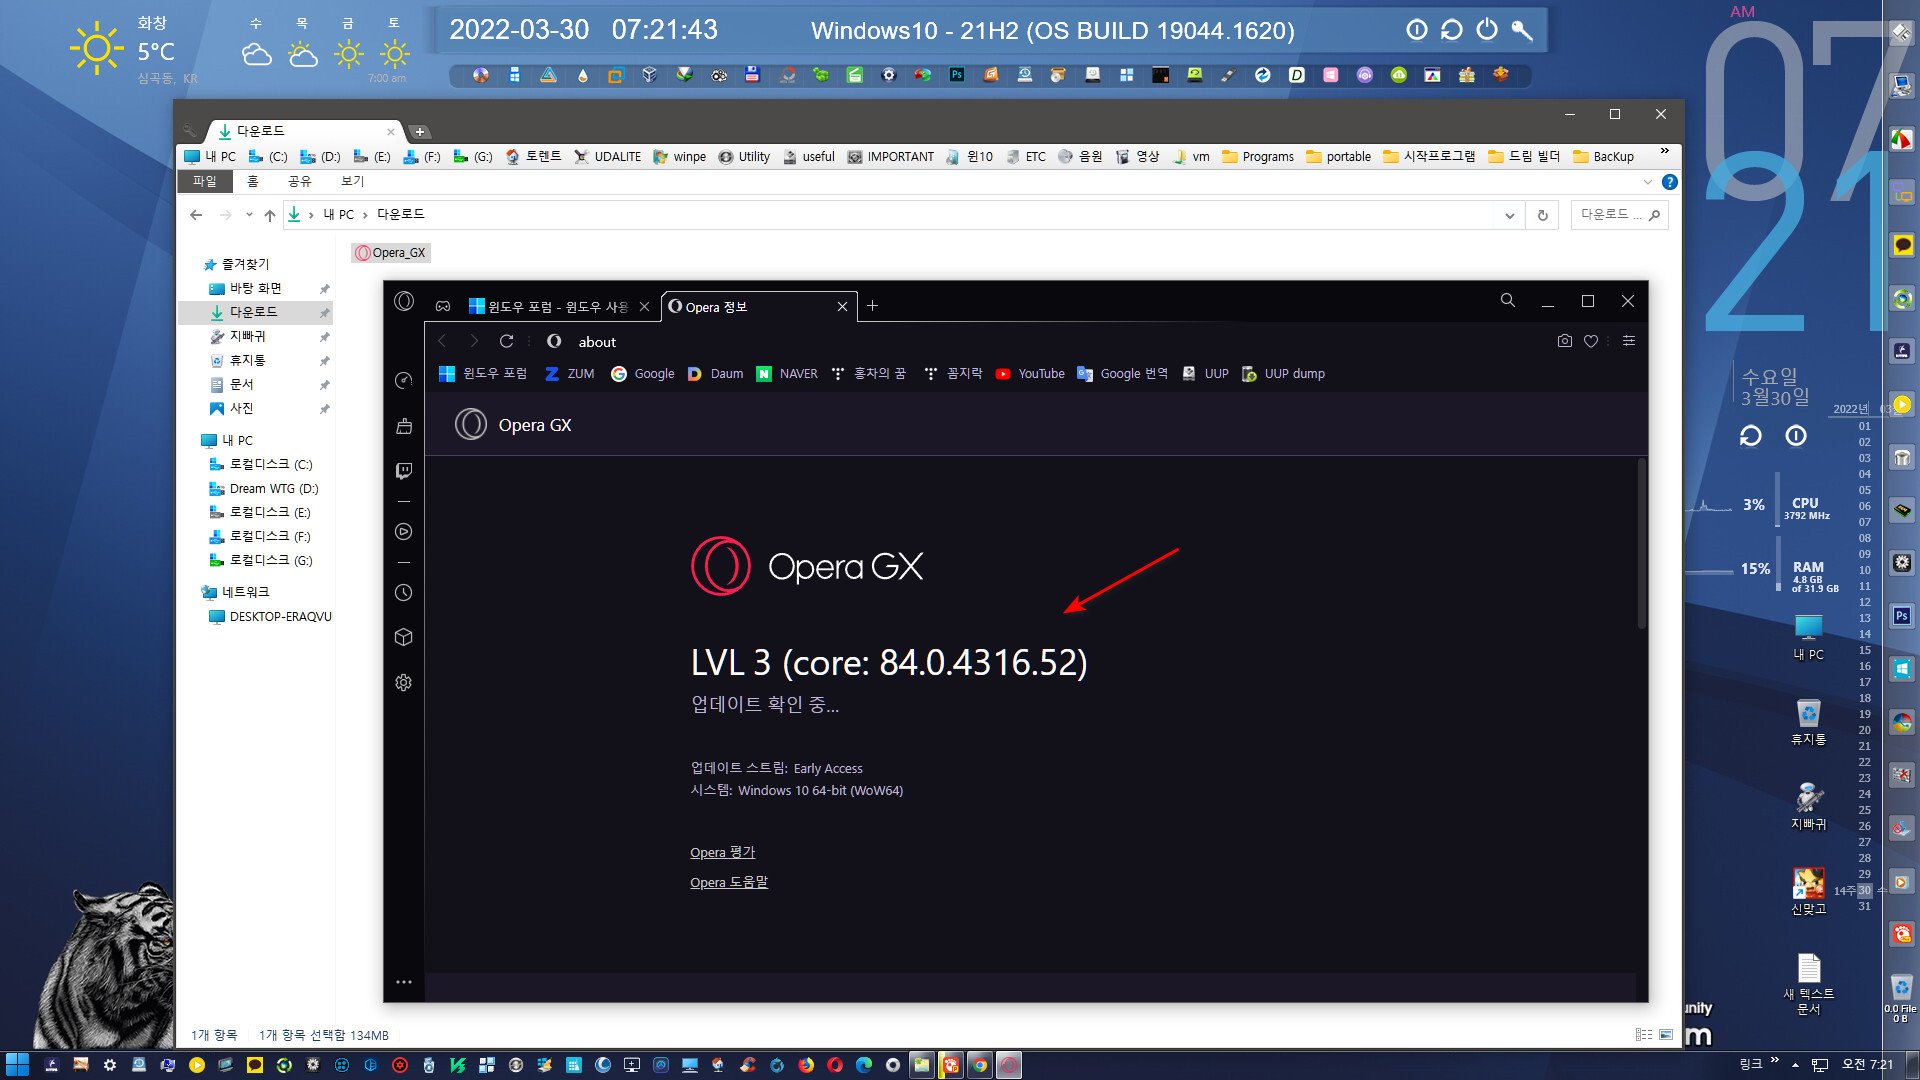 Opera GX 101.0.4843.55 instal the new for mac